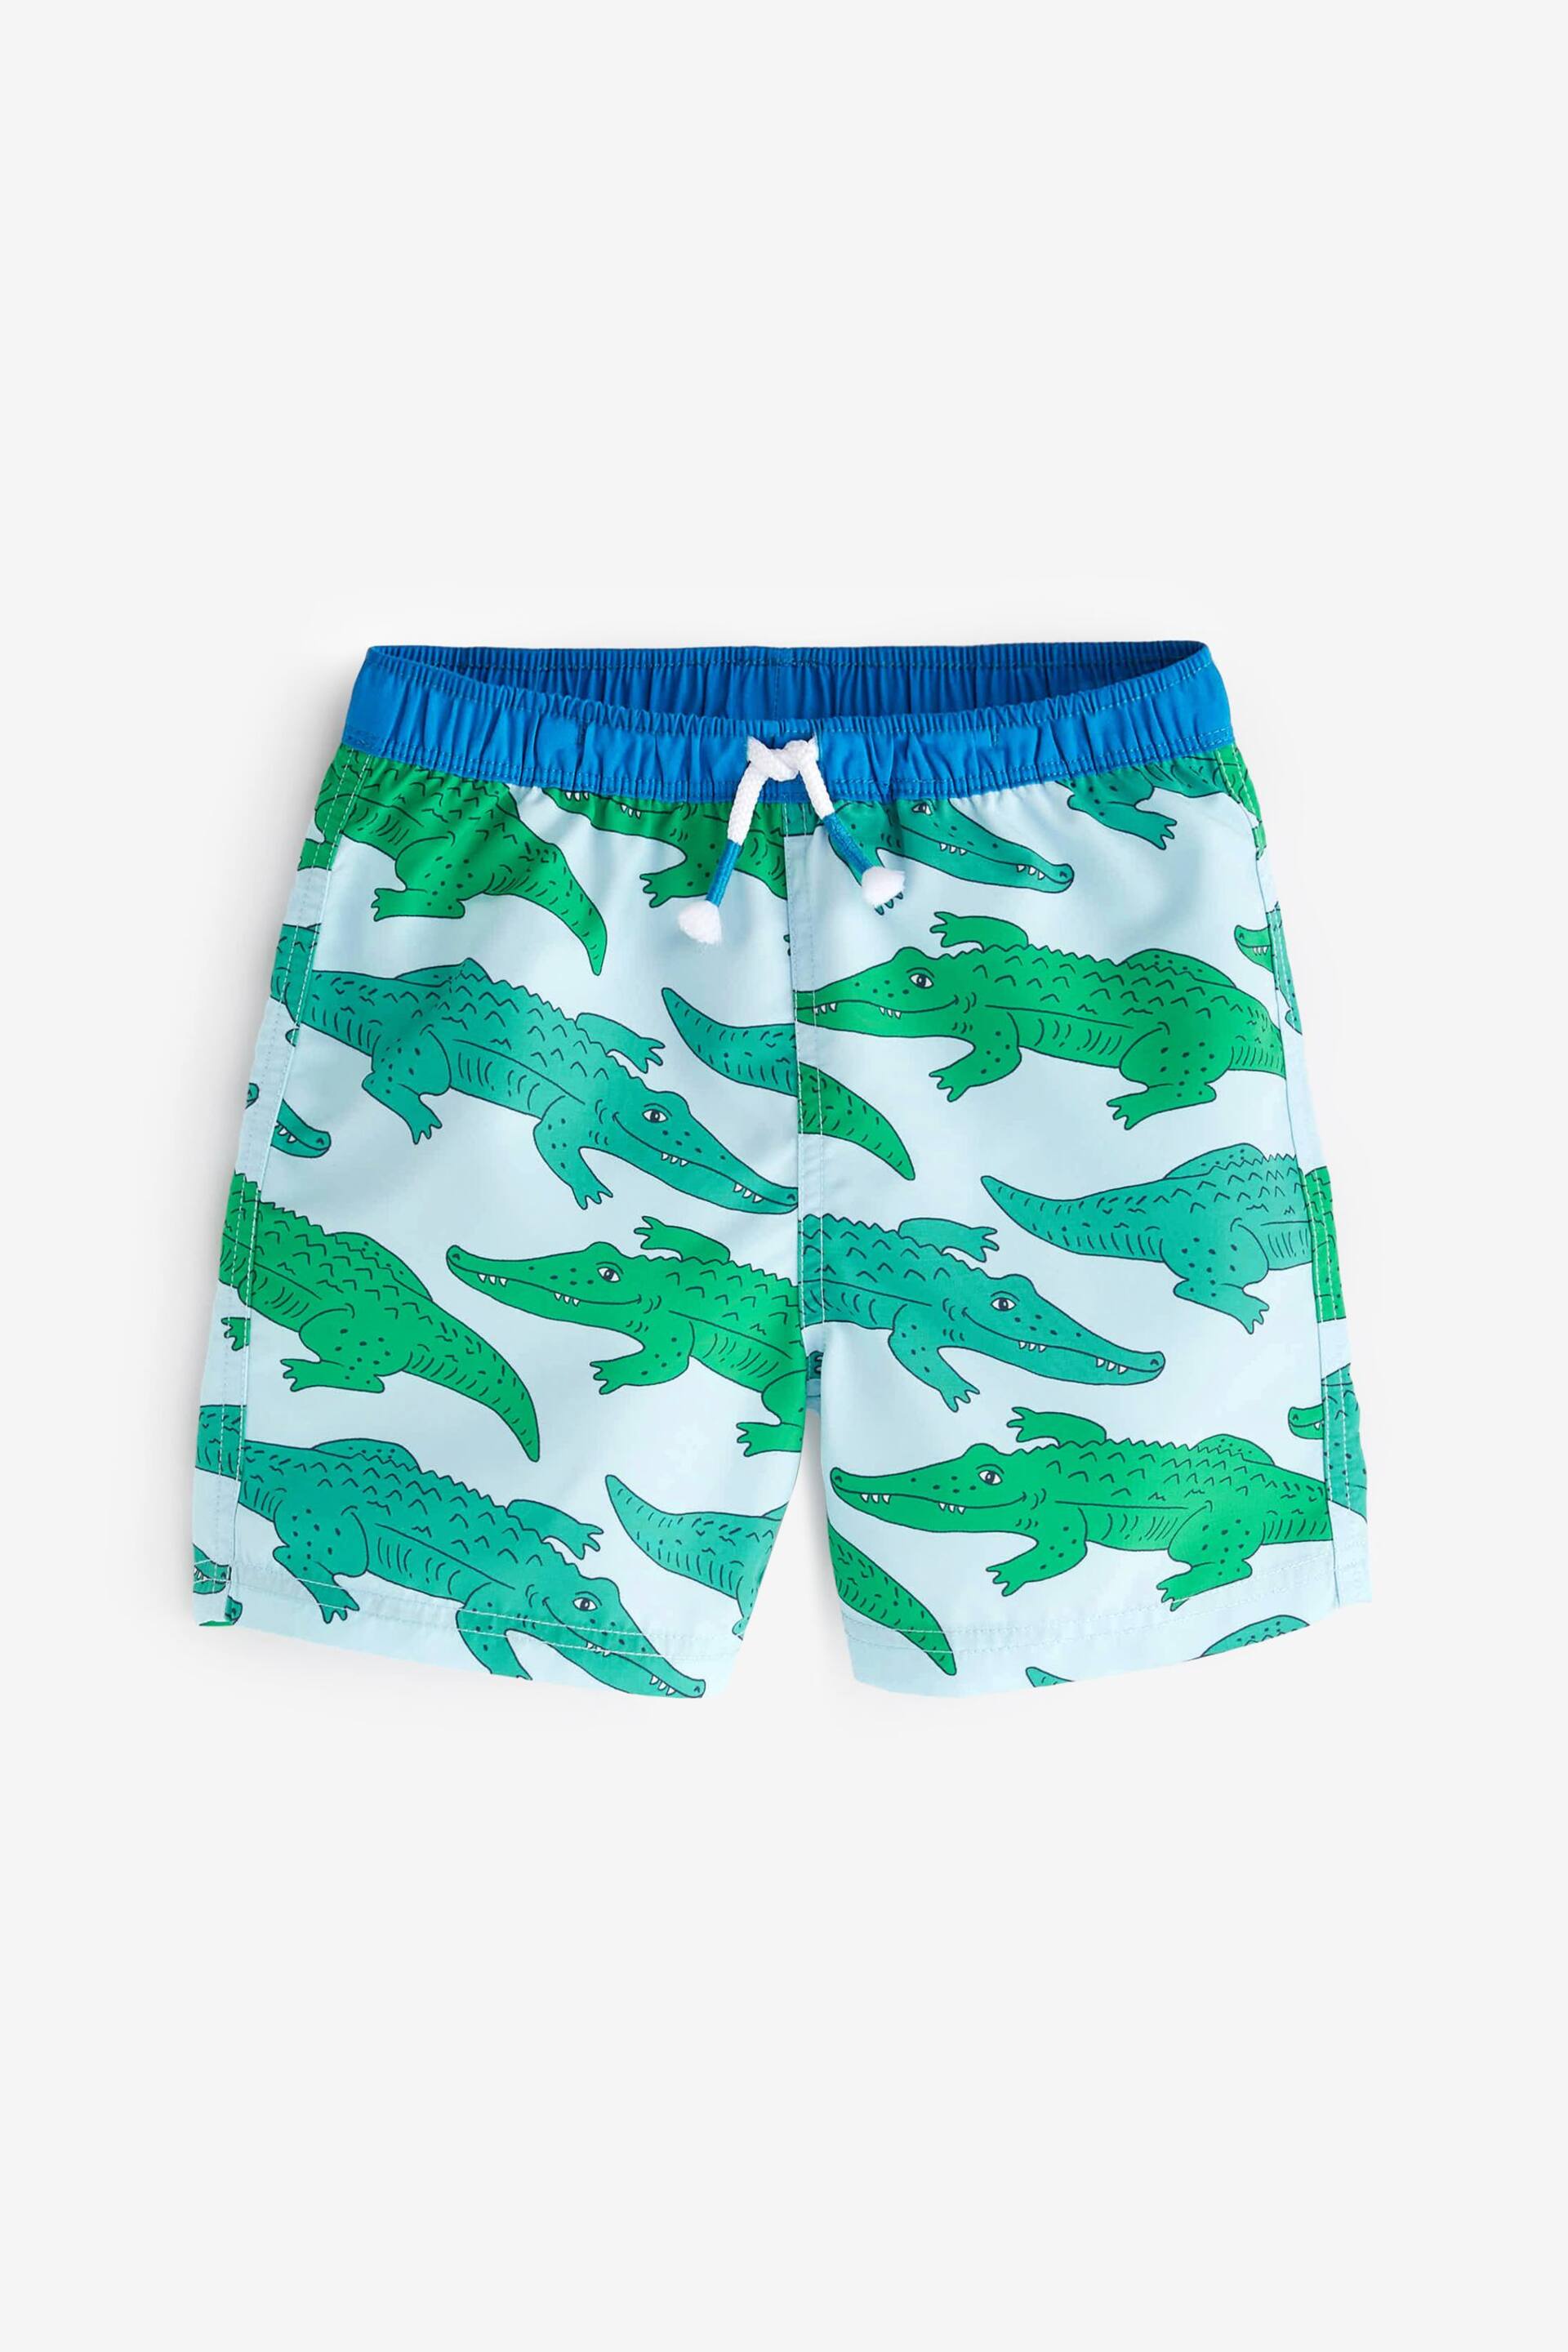 Boden Green Crocodile Swim Shorts - Image 1 of 3